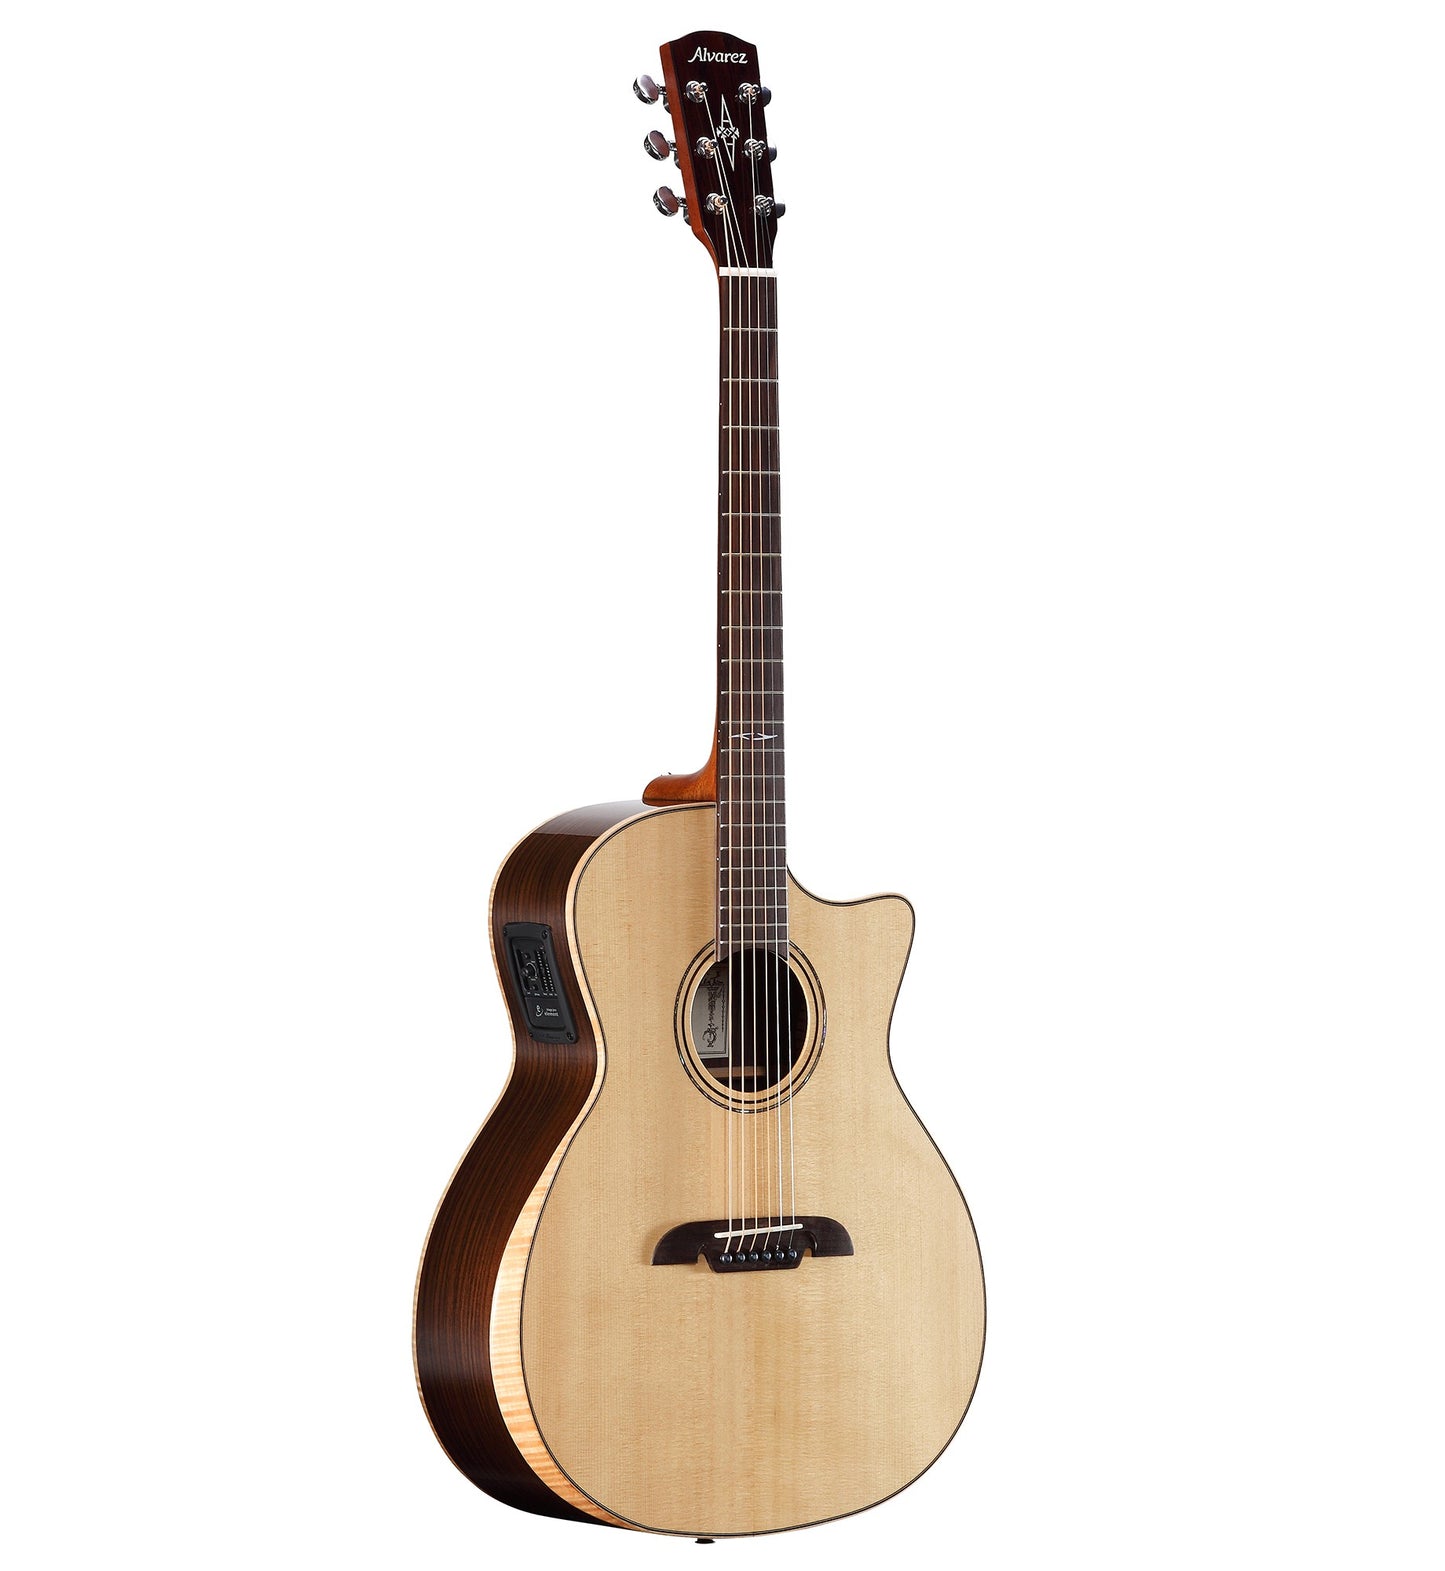 Alvarez AG70WCEAR Solid Top Grand Auditorium Acoustic Guitar with Pickup